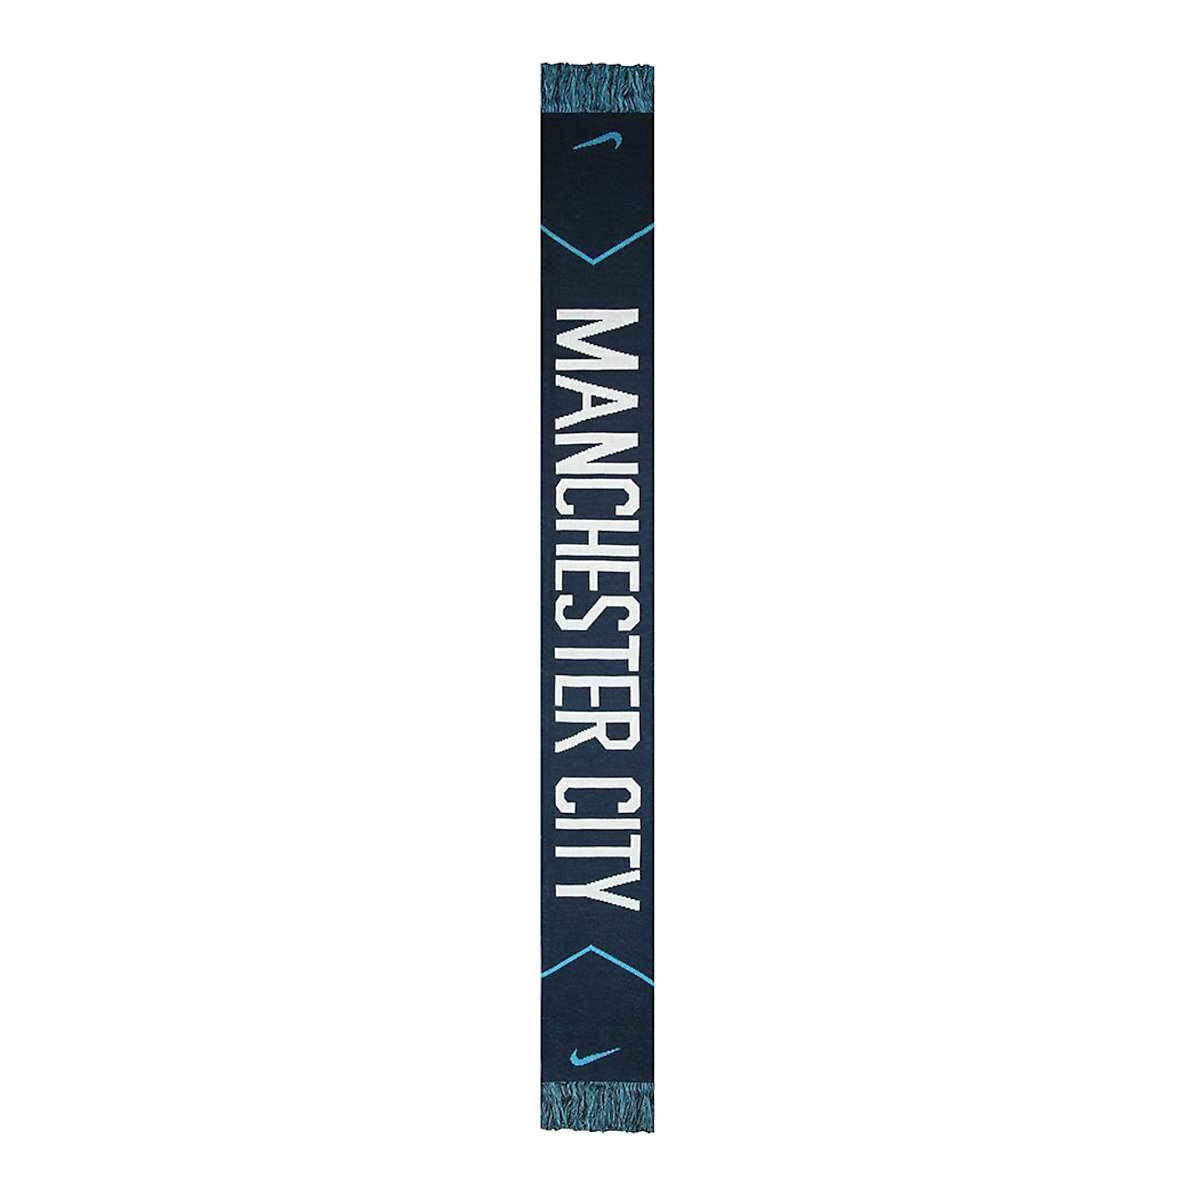 NIKE Global Football Manchester City Supporters Scarf NWV69-405 Schals für Kinder dunkelblau